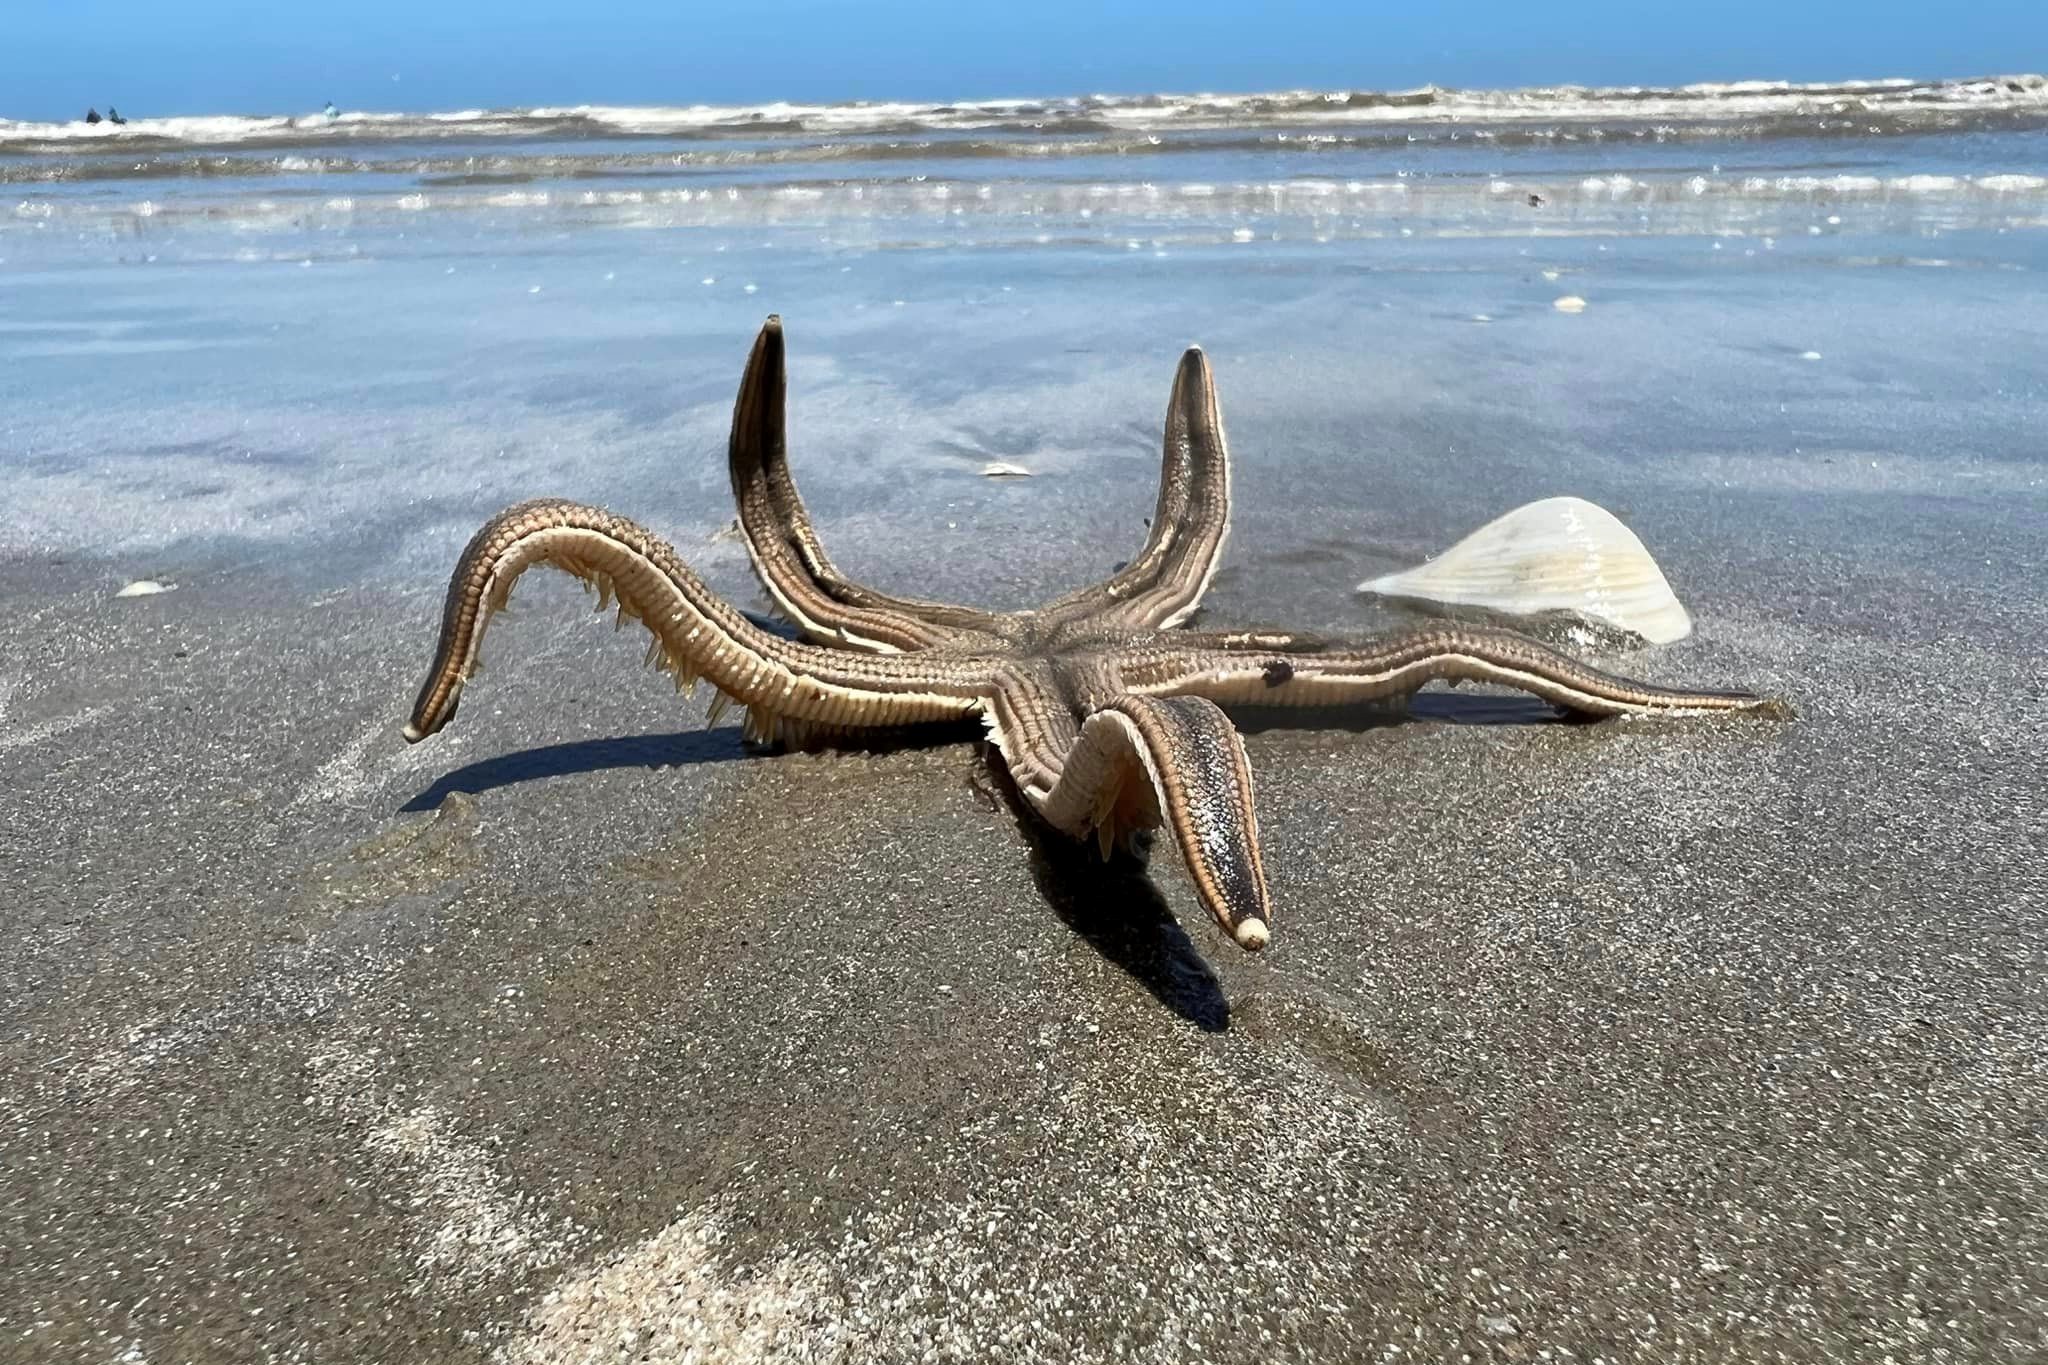 Huge starfish found walking in the surf on Texas beach